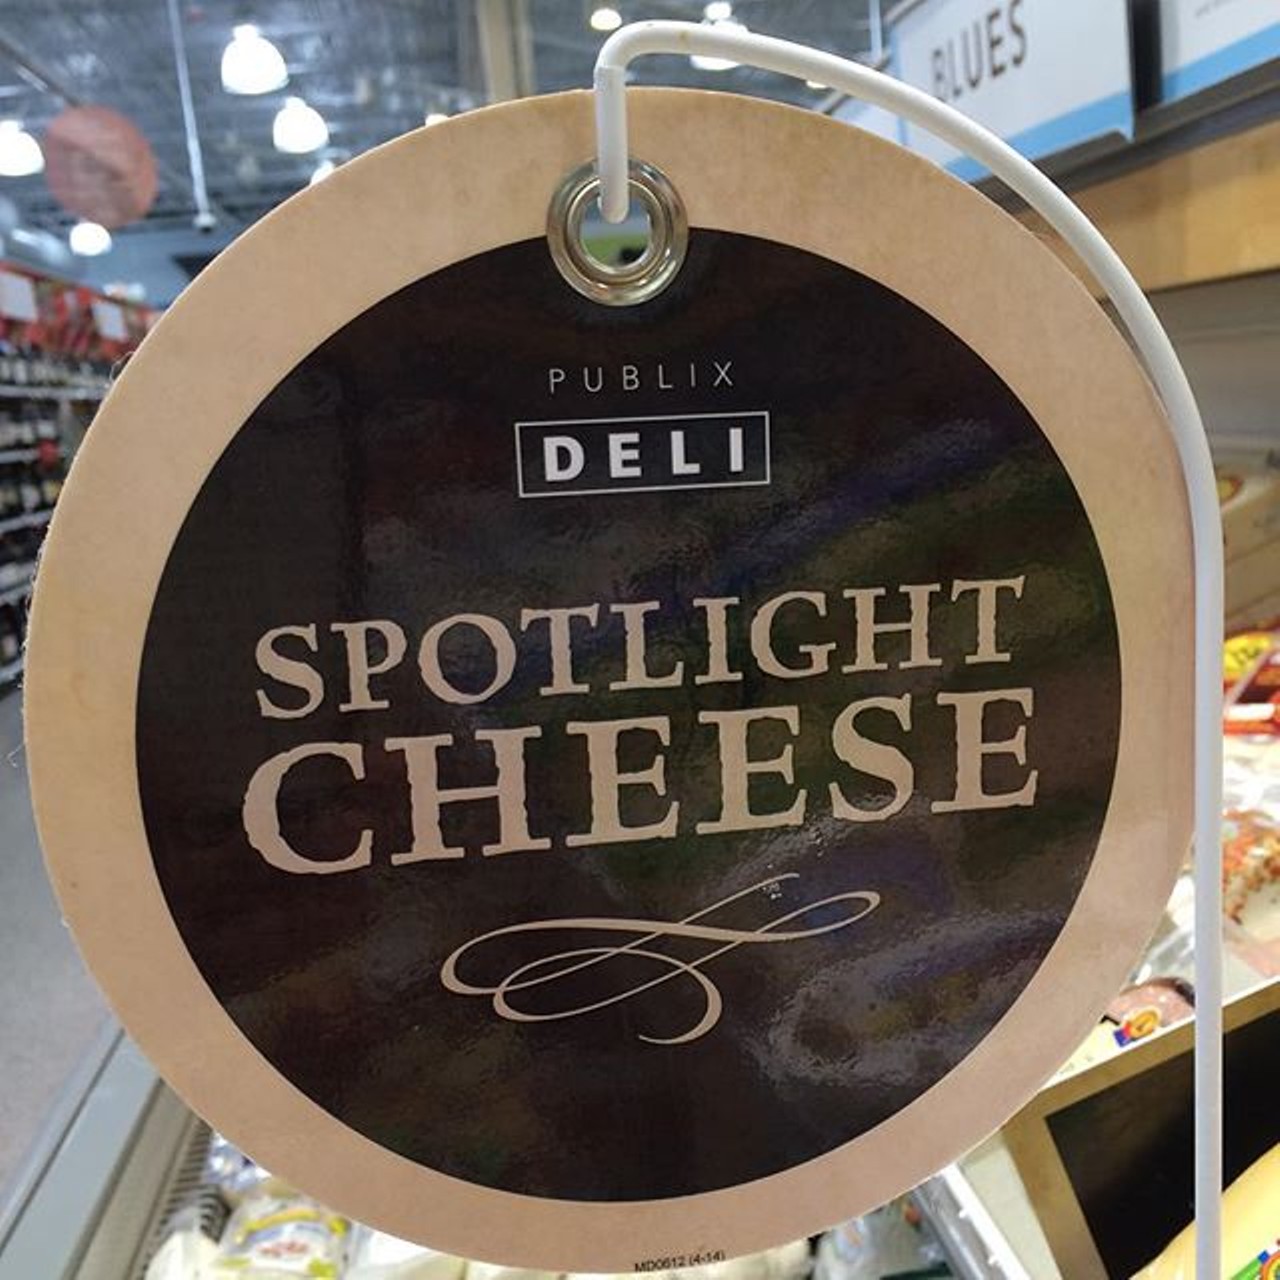 "Current status: &#x1F3B6;workin' on my night cheese&#x1F3B6; #30rock #nightcheese"
Photo via Instagram user pderevere